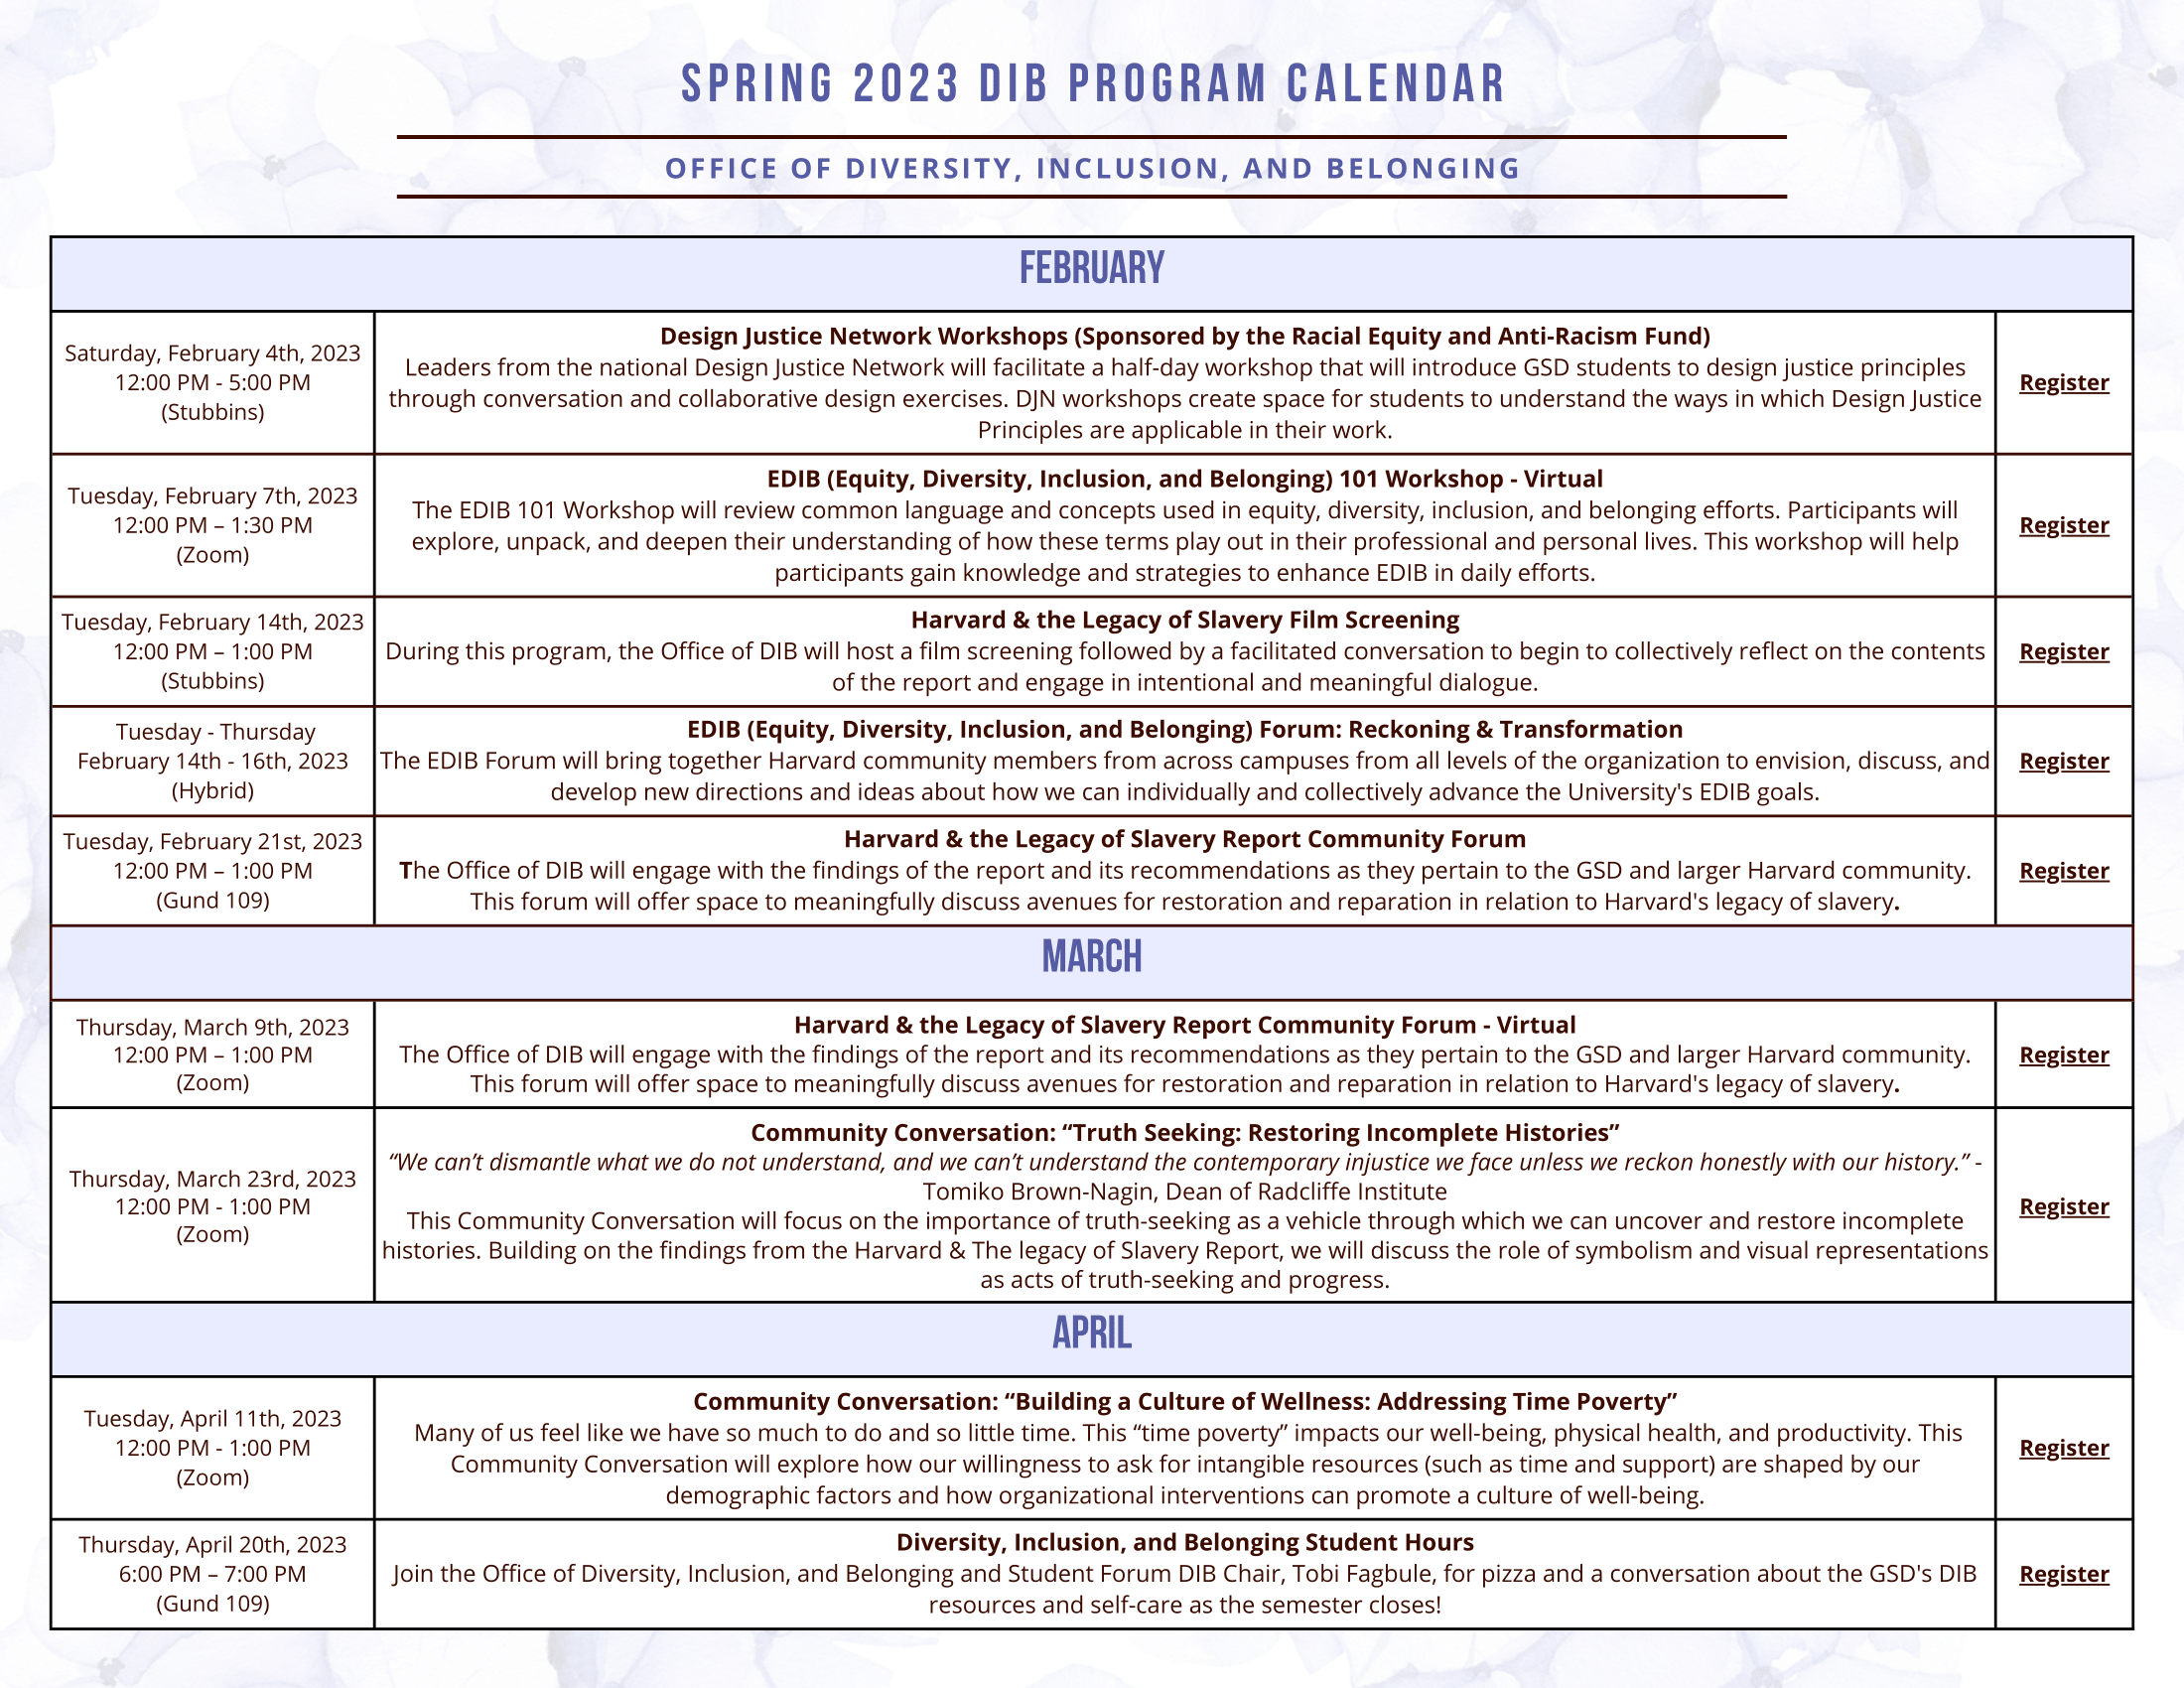 Spring 2023 Programming Calendar